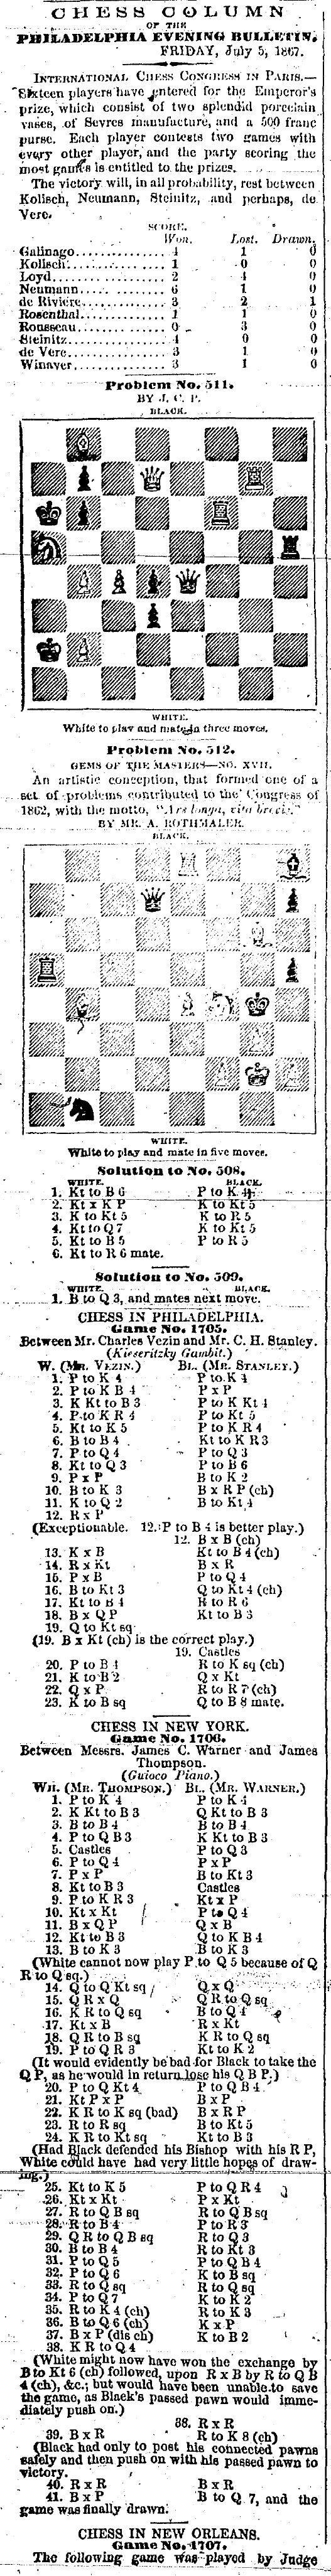 1867.07.05-01 Philadelphia Daily Evening Bulletin.jpg